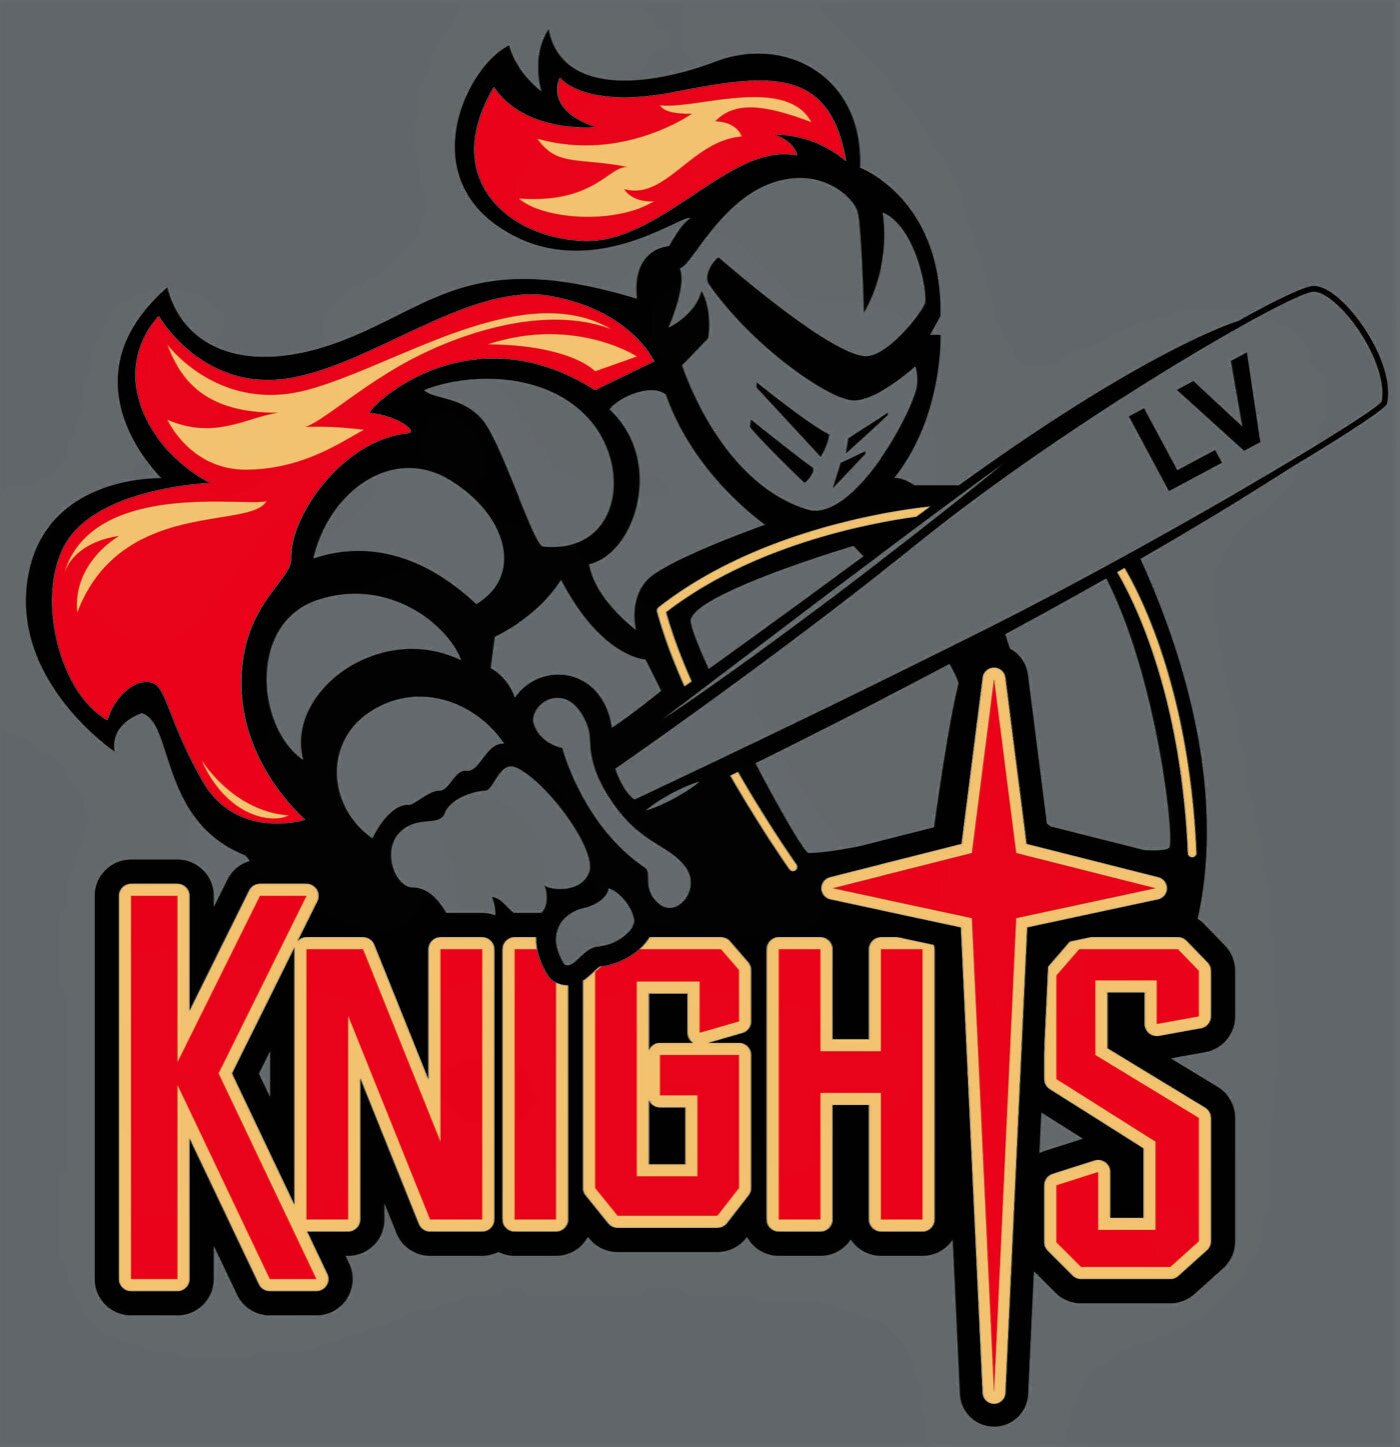 LV Knights Baseball